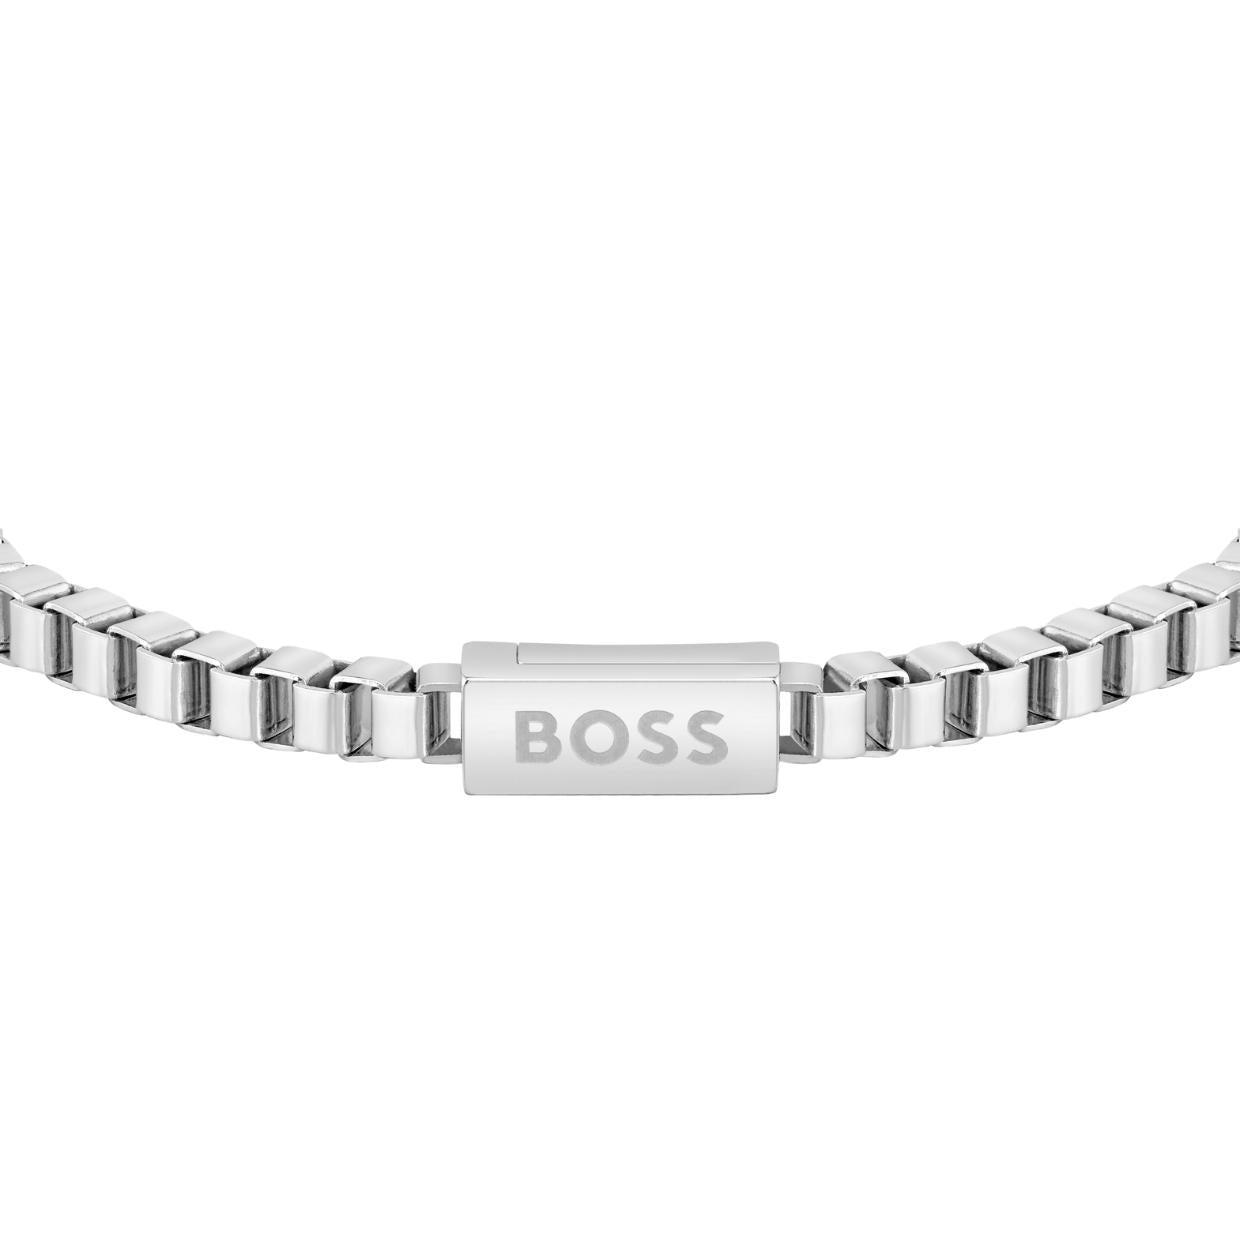 BOSS Cube-Shaped Chain Link Sliver Bracelet